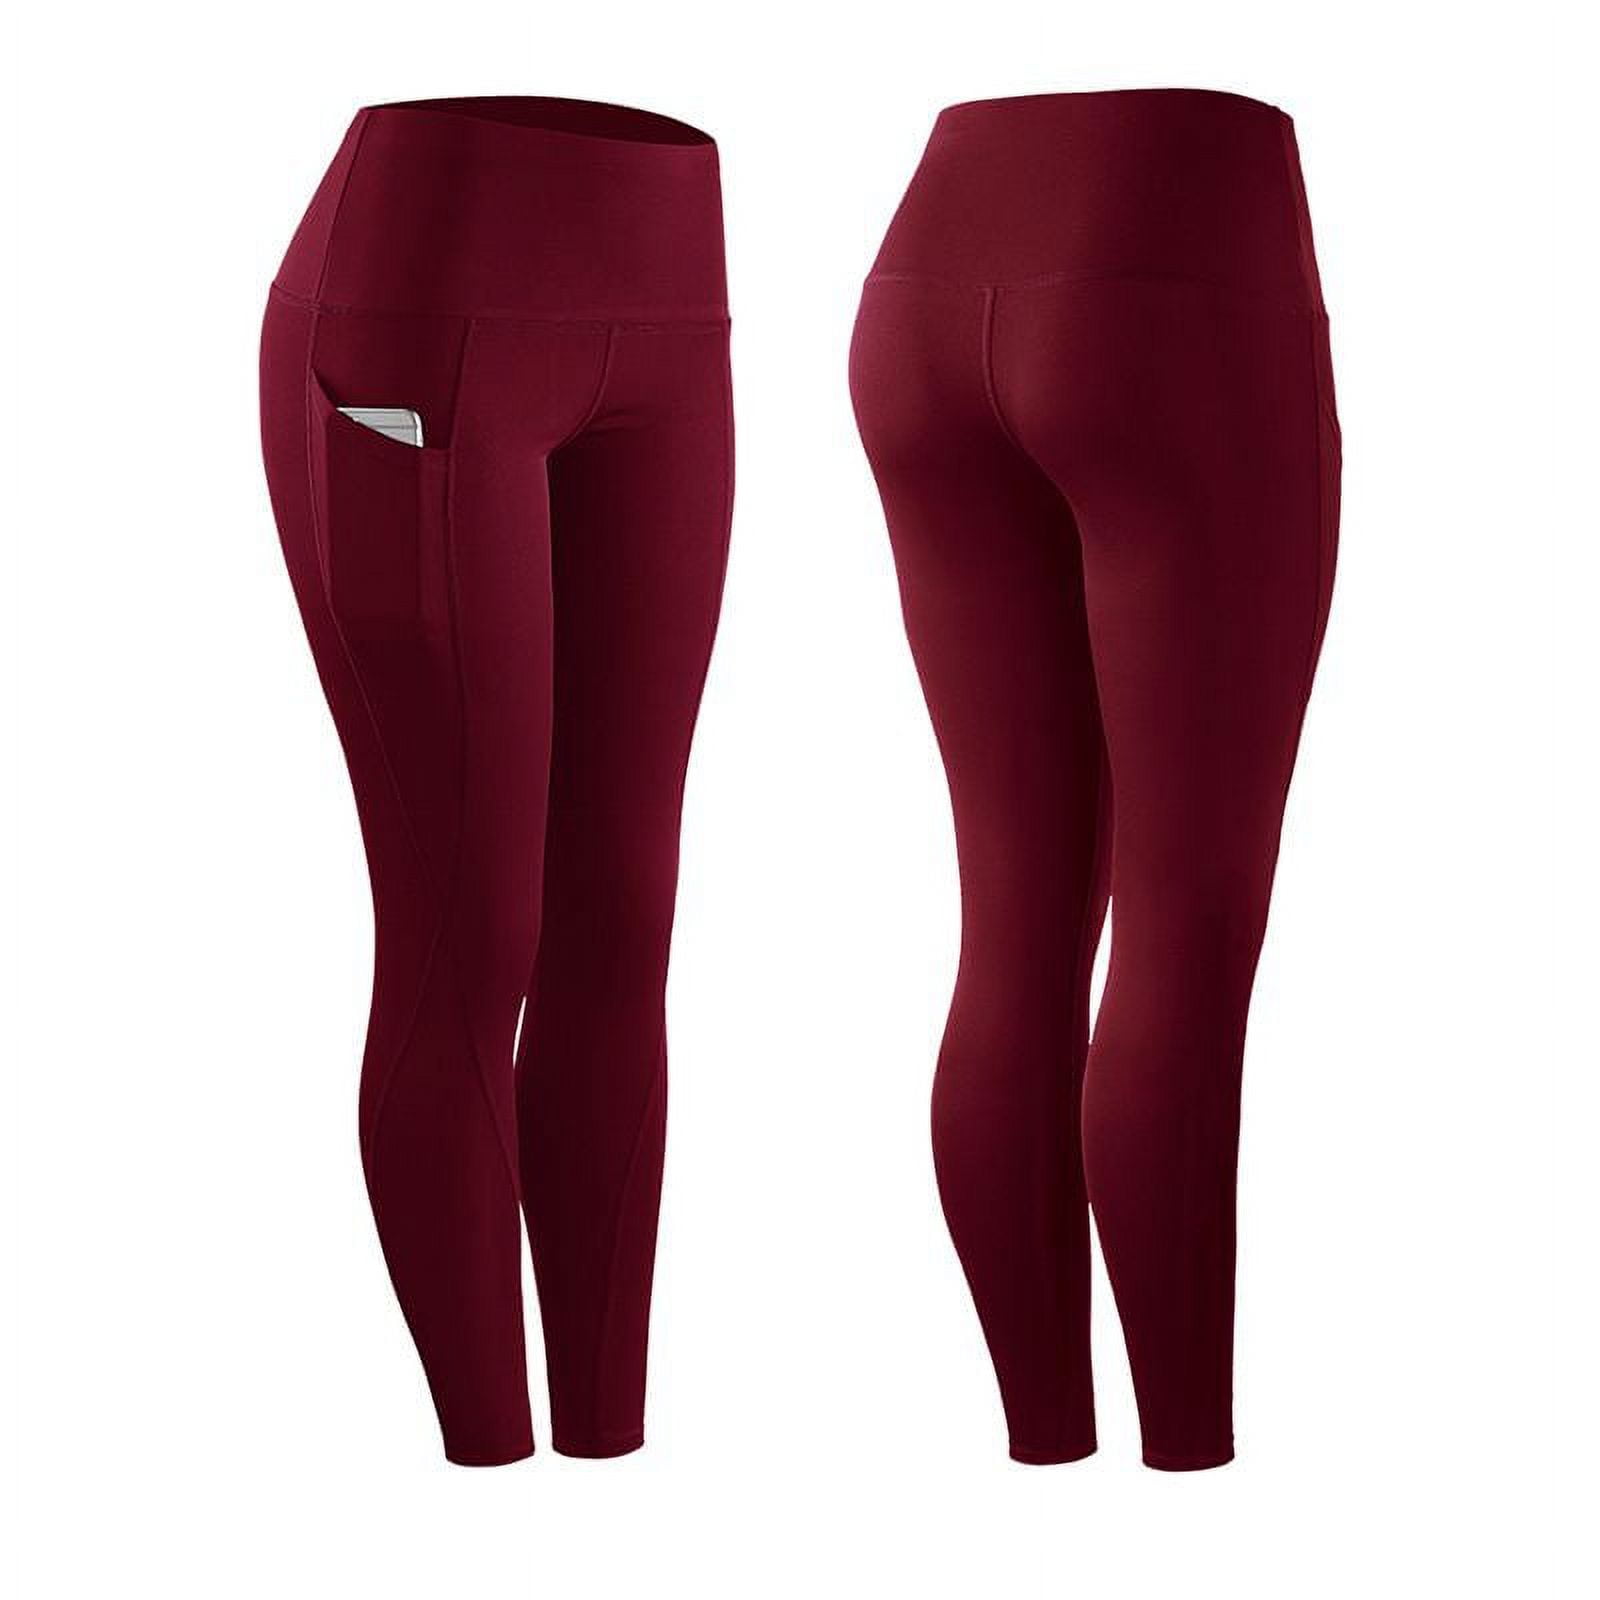 FANTADOOL High Elastic Leggings Pant Women Solid Stretch Compression  Sportswear Casual Yoga Jogging Leggings Pants With Pocket Dark Red L 